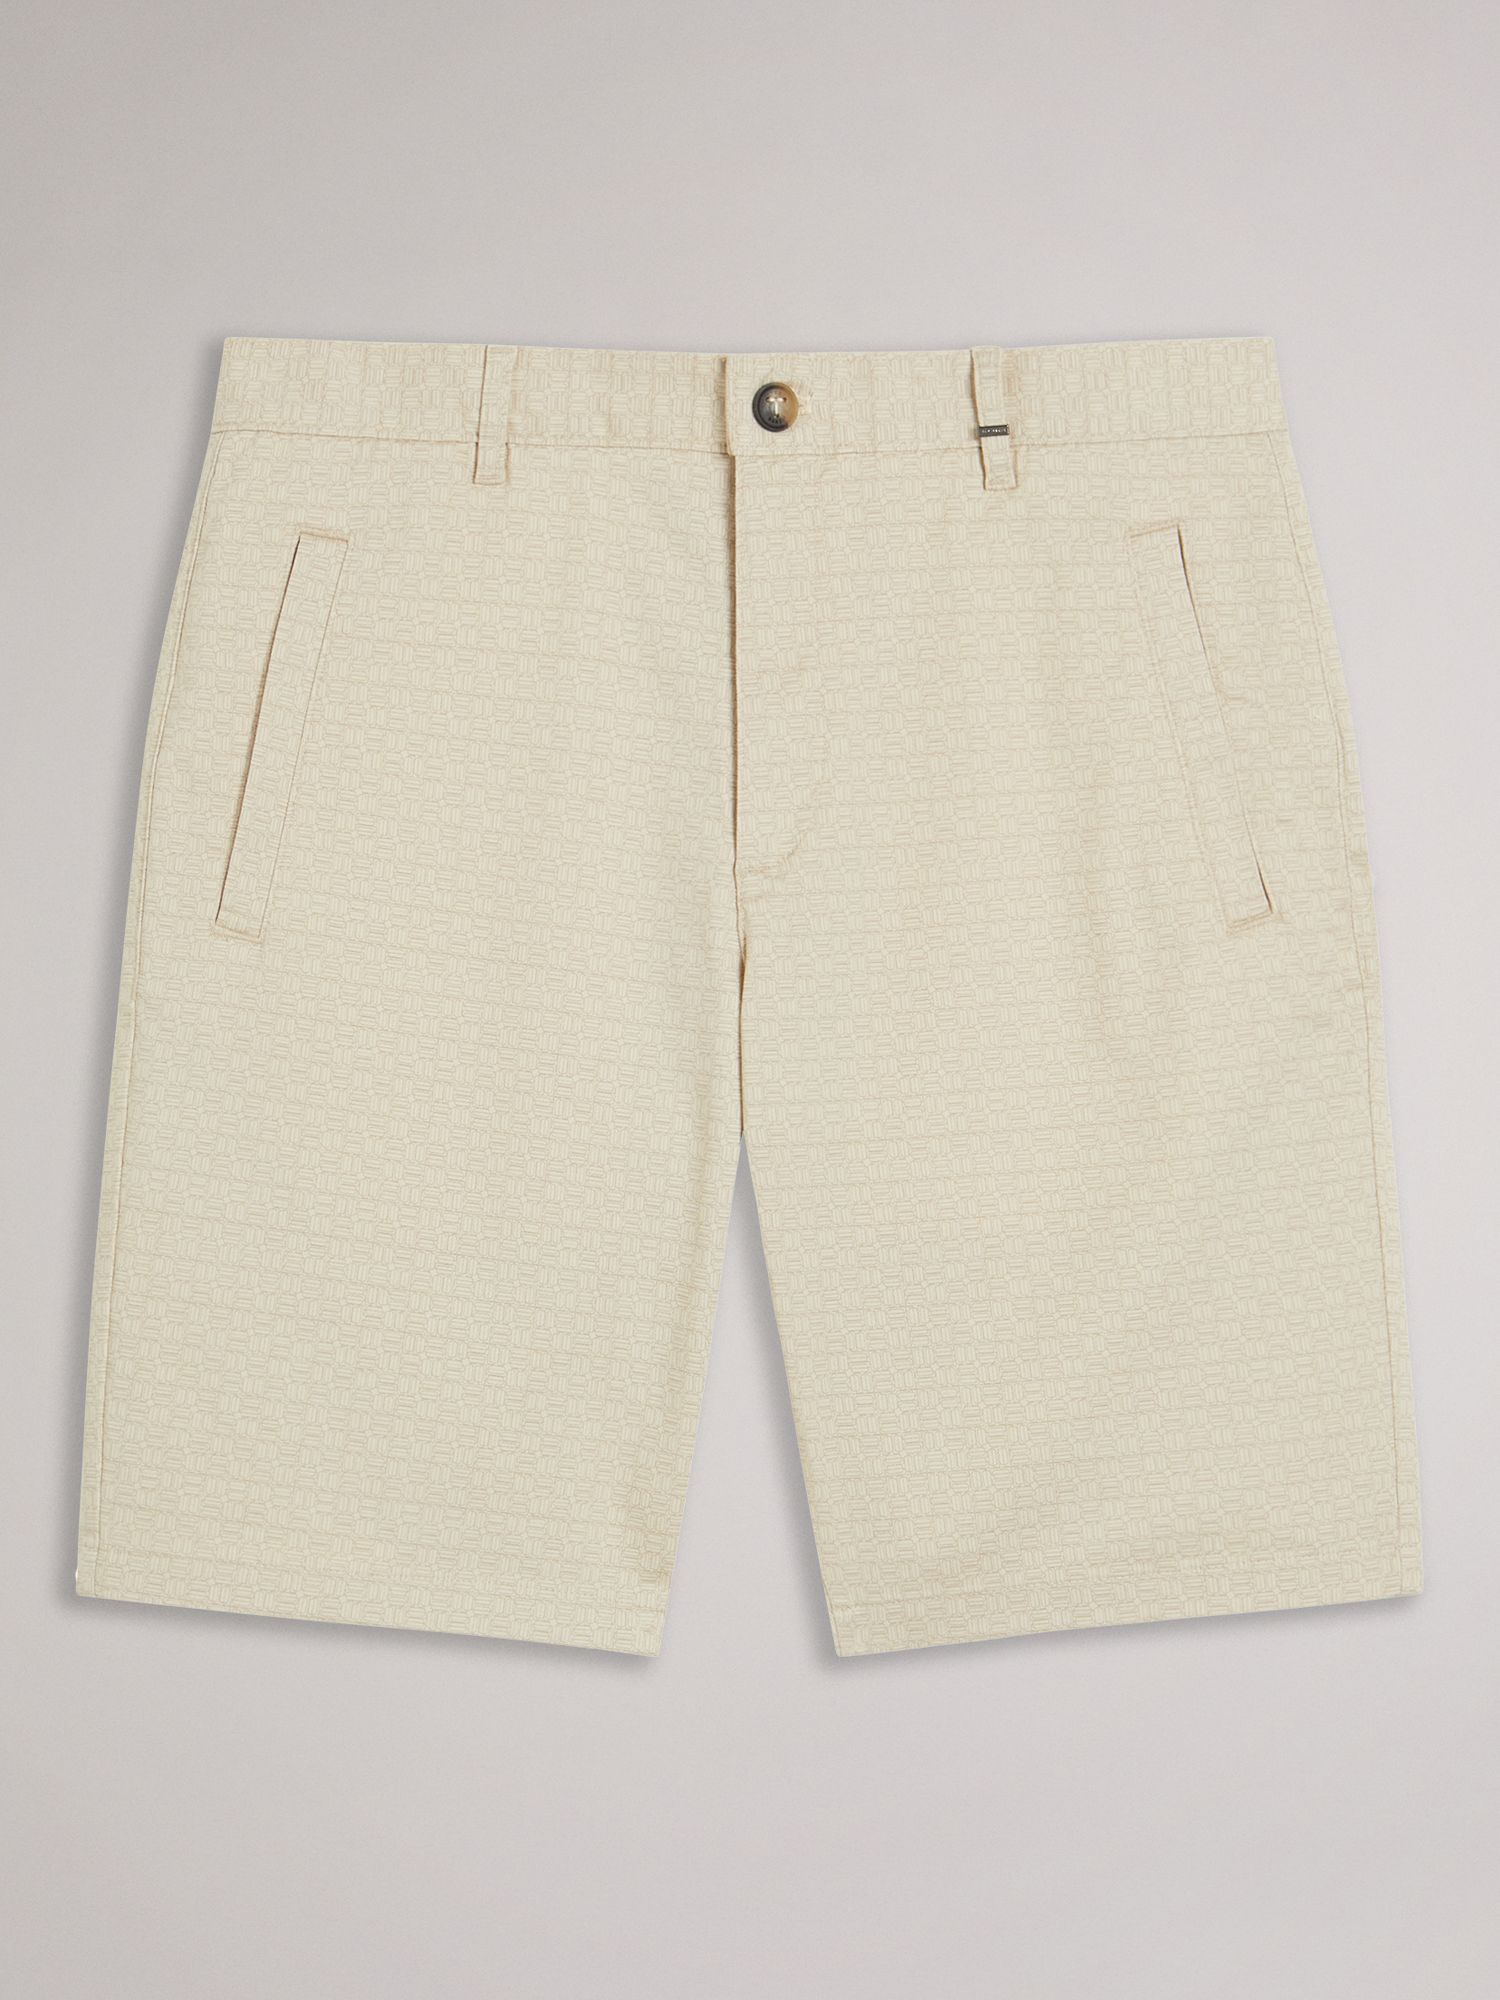 Ted Baker Gomer Regular Fit Geometric Shorts, Cream, 28R